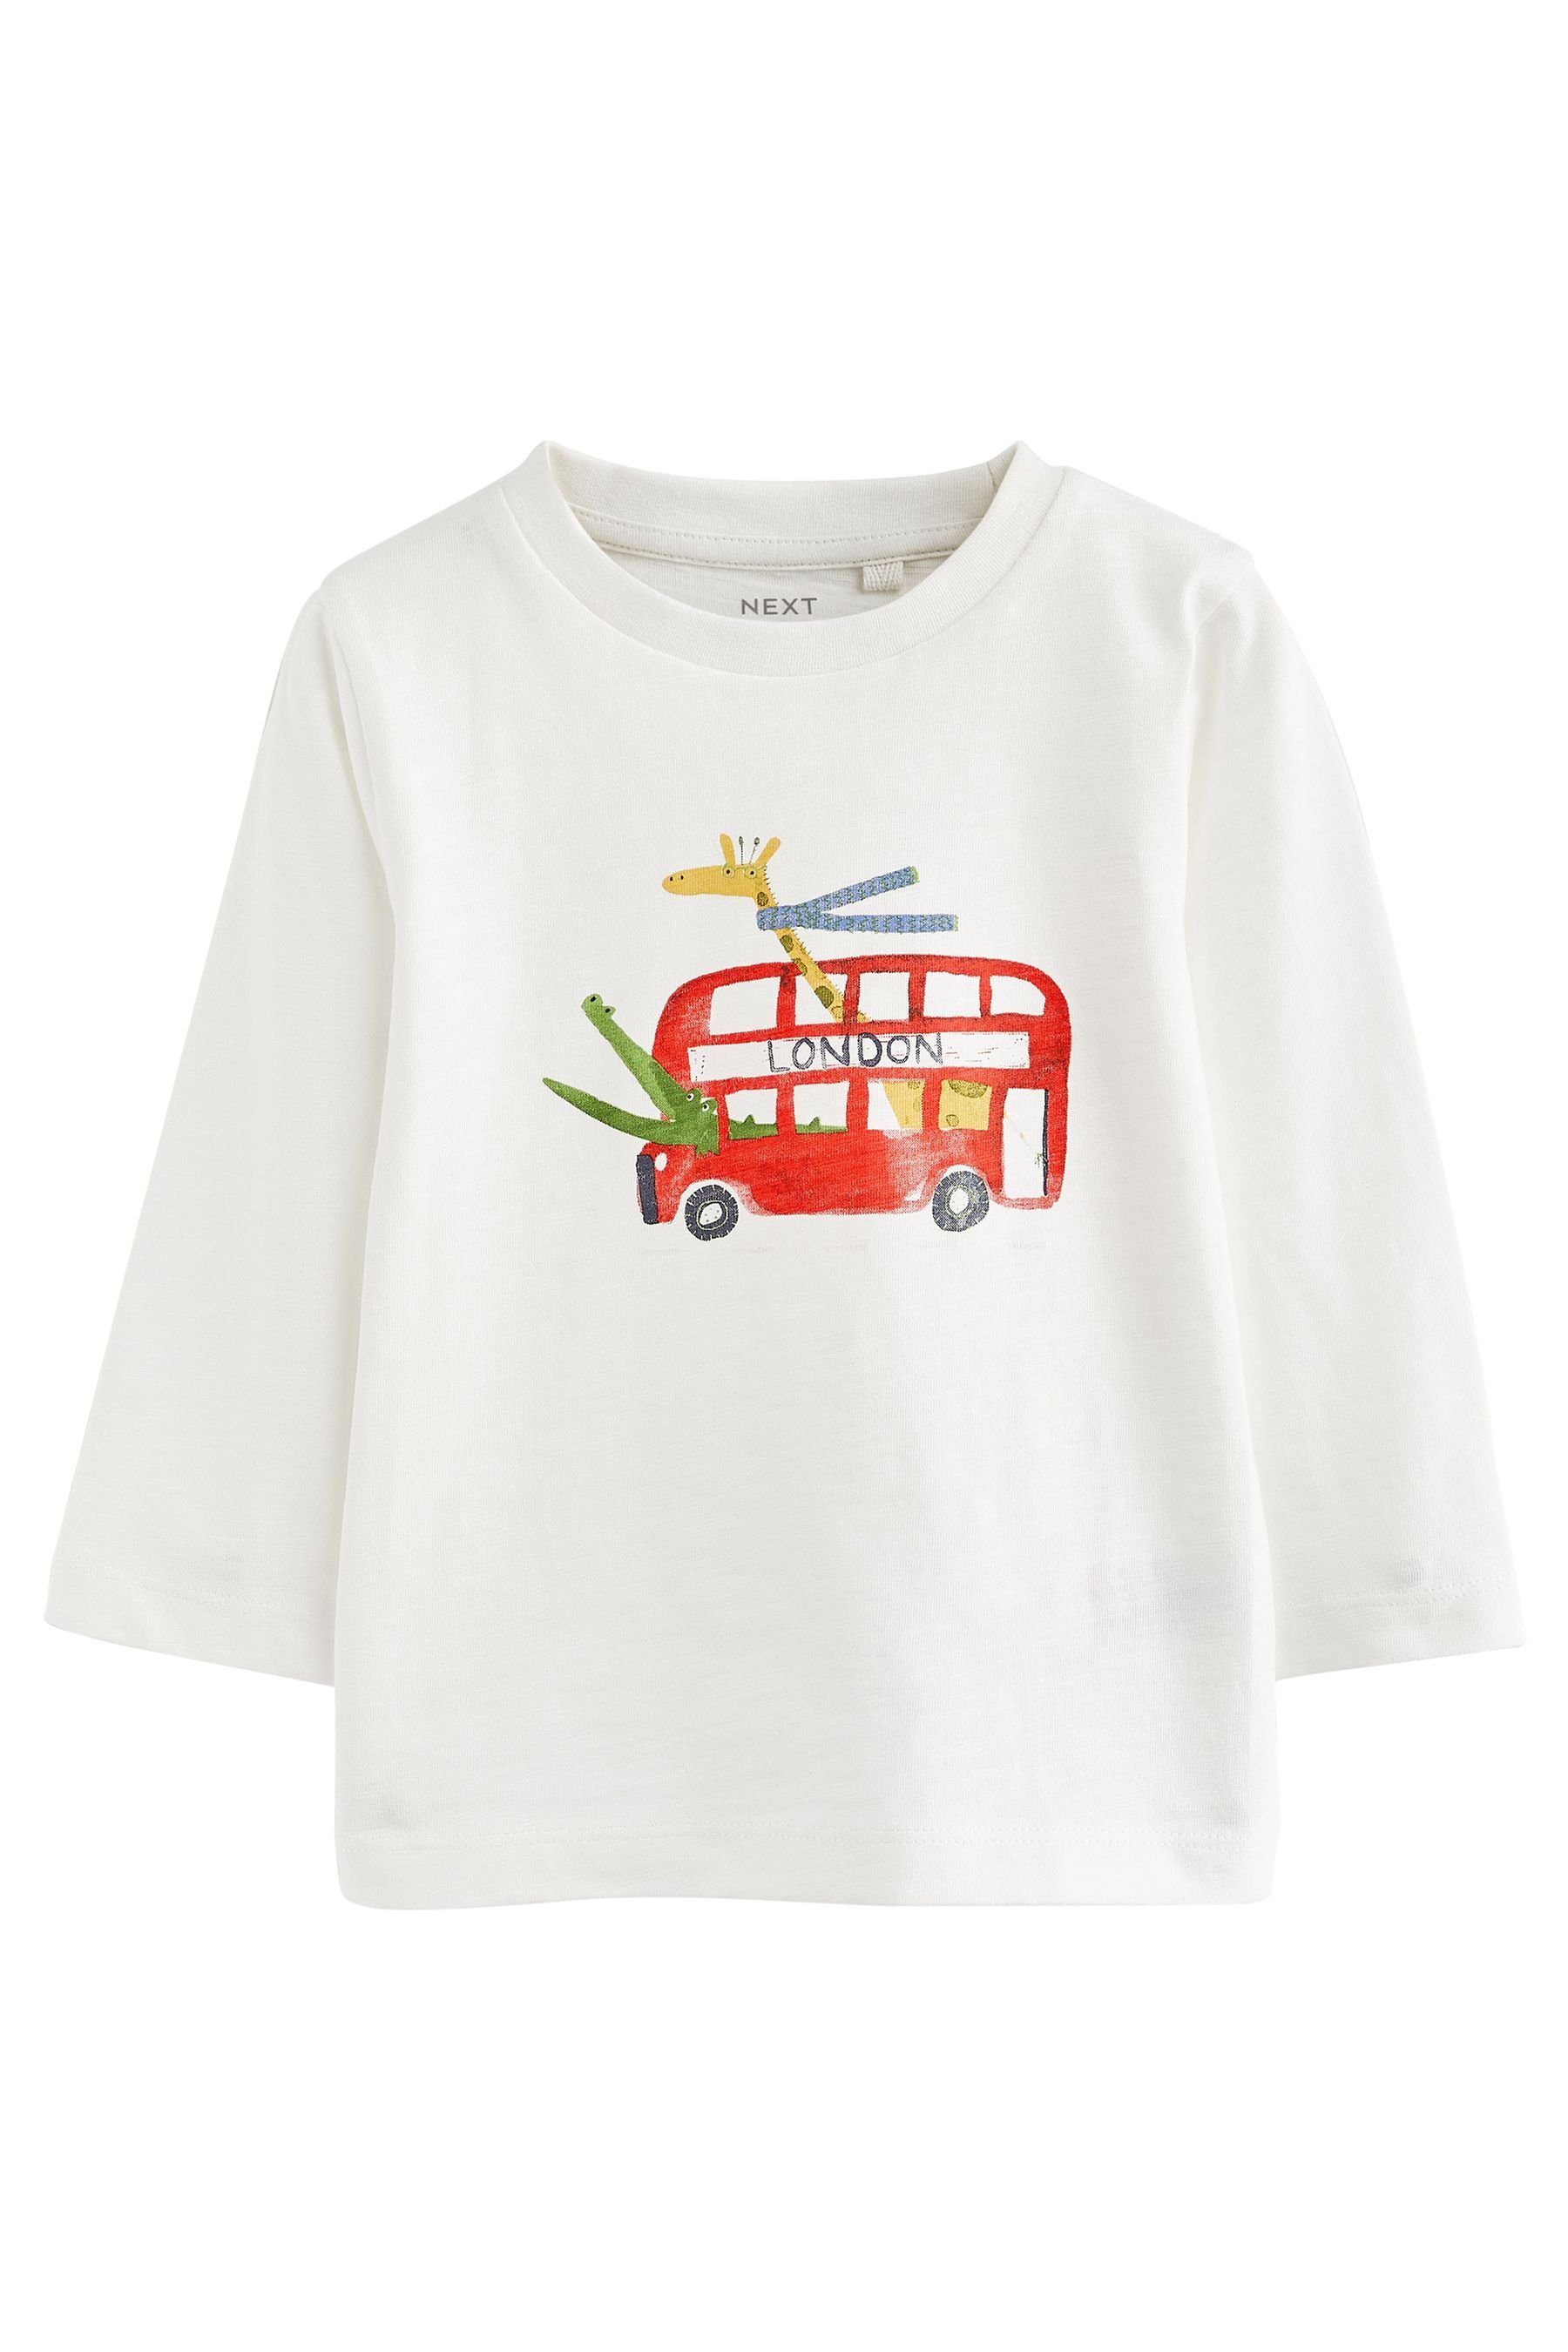 Blue/White (3-tlg) Bus Langarmshirt Shirts im 3er-Pack London Next mit Figurenmotiv Langärmelige